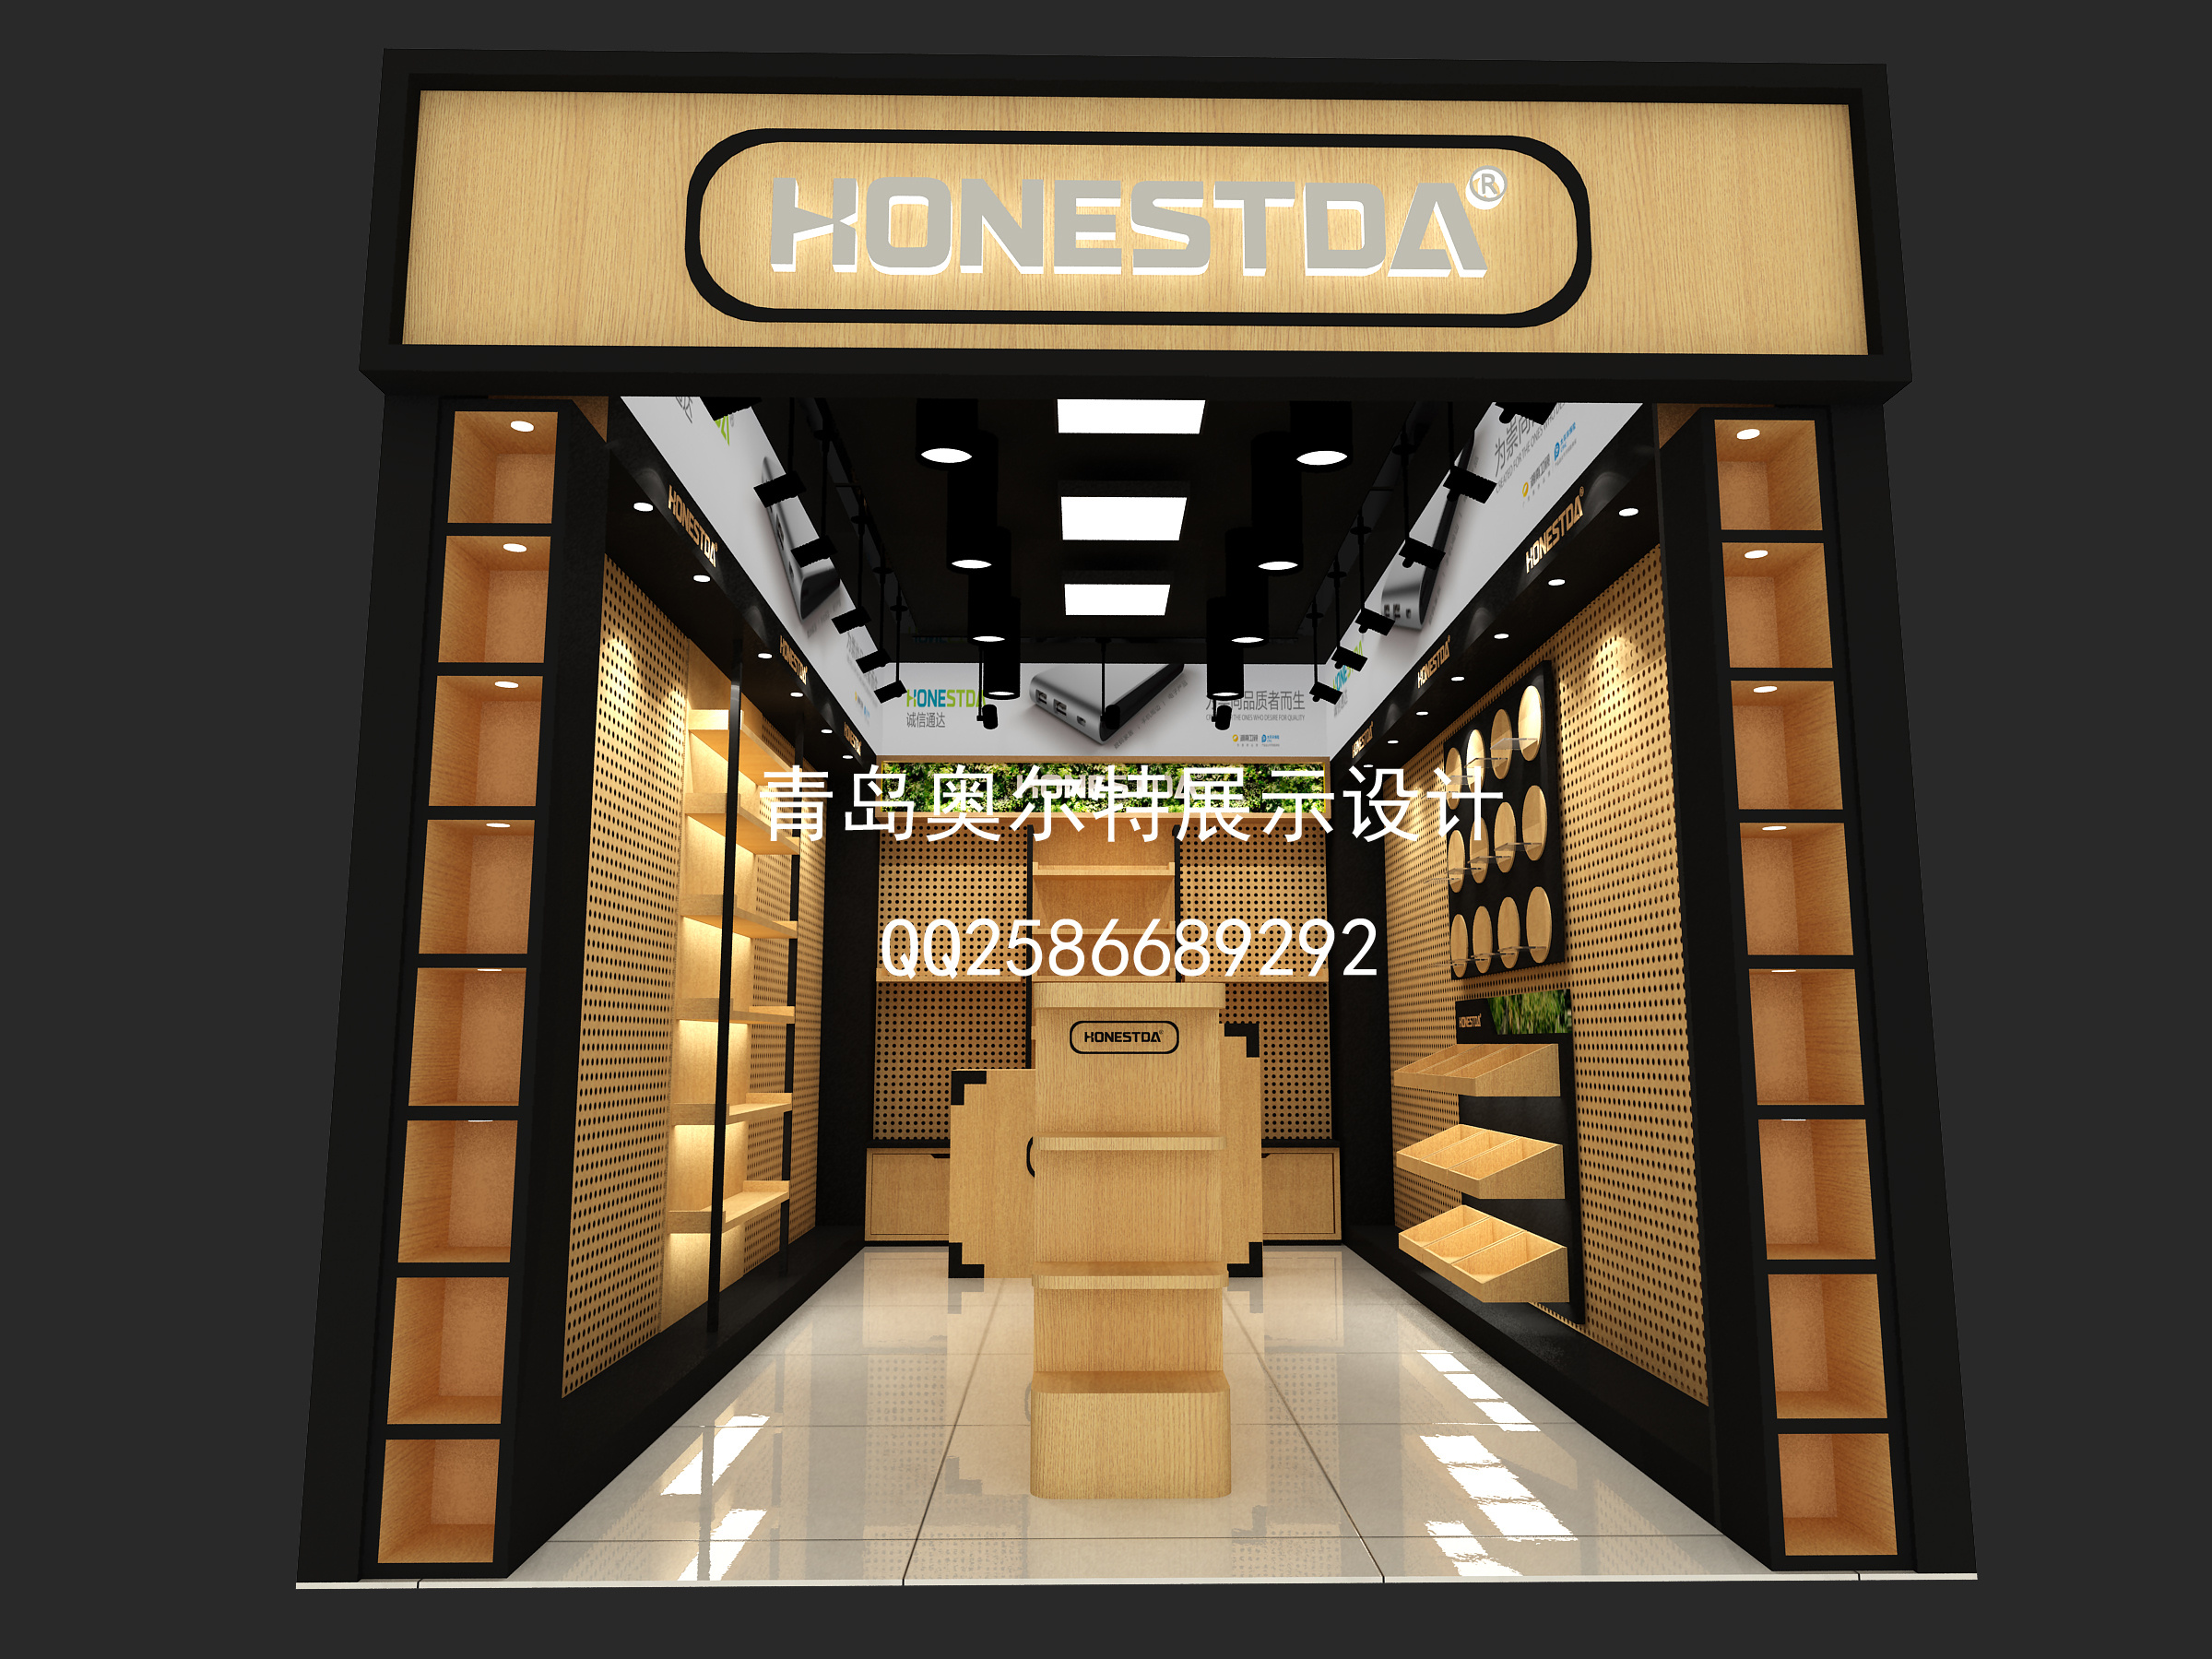 OPPO手机专卖店设计深圳SI设计,专卖店设计,空间设计,SI设计公司,专卖店设计公司,空间设计公司 - 微空间设计